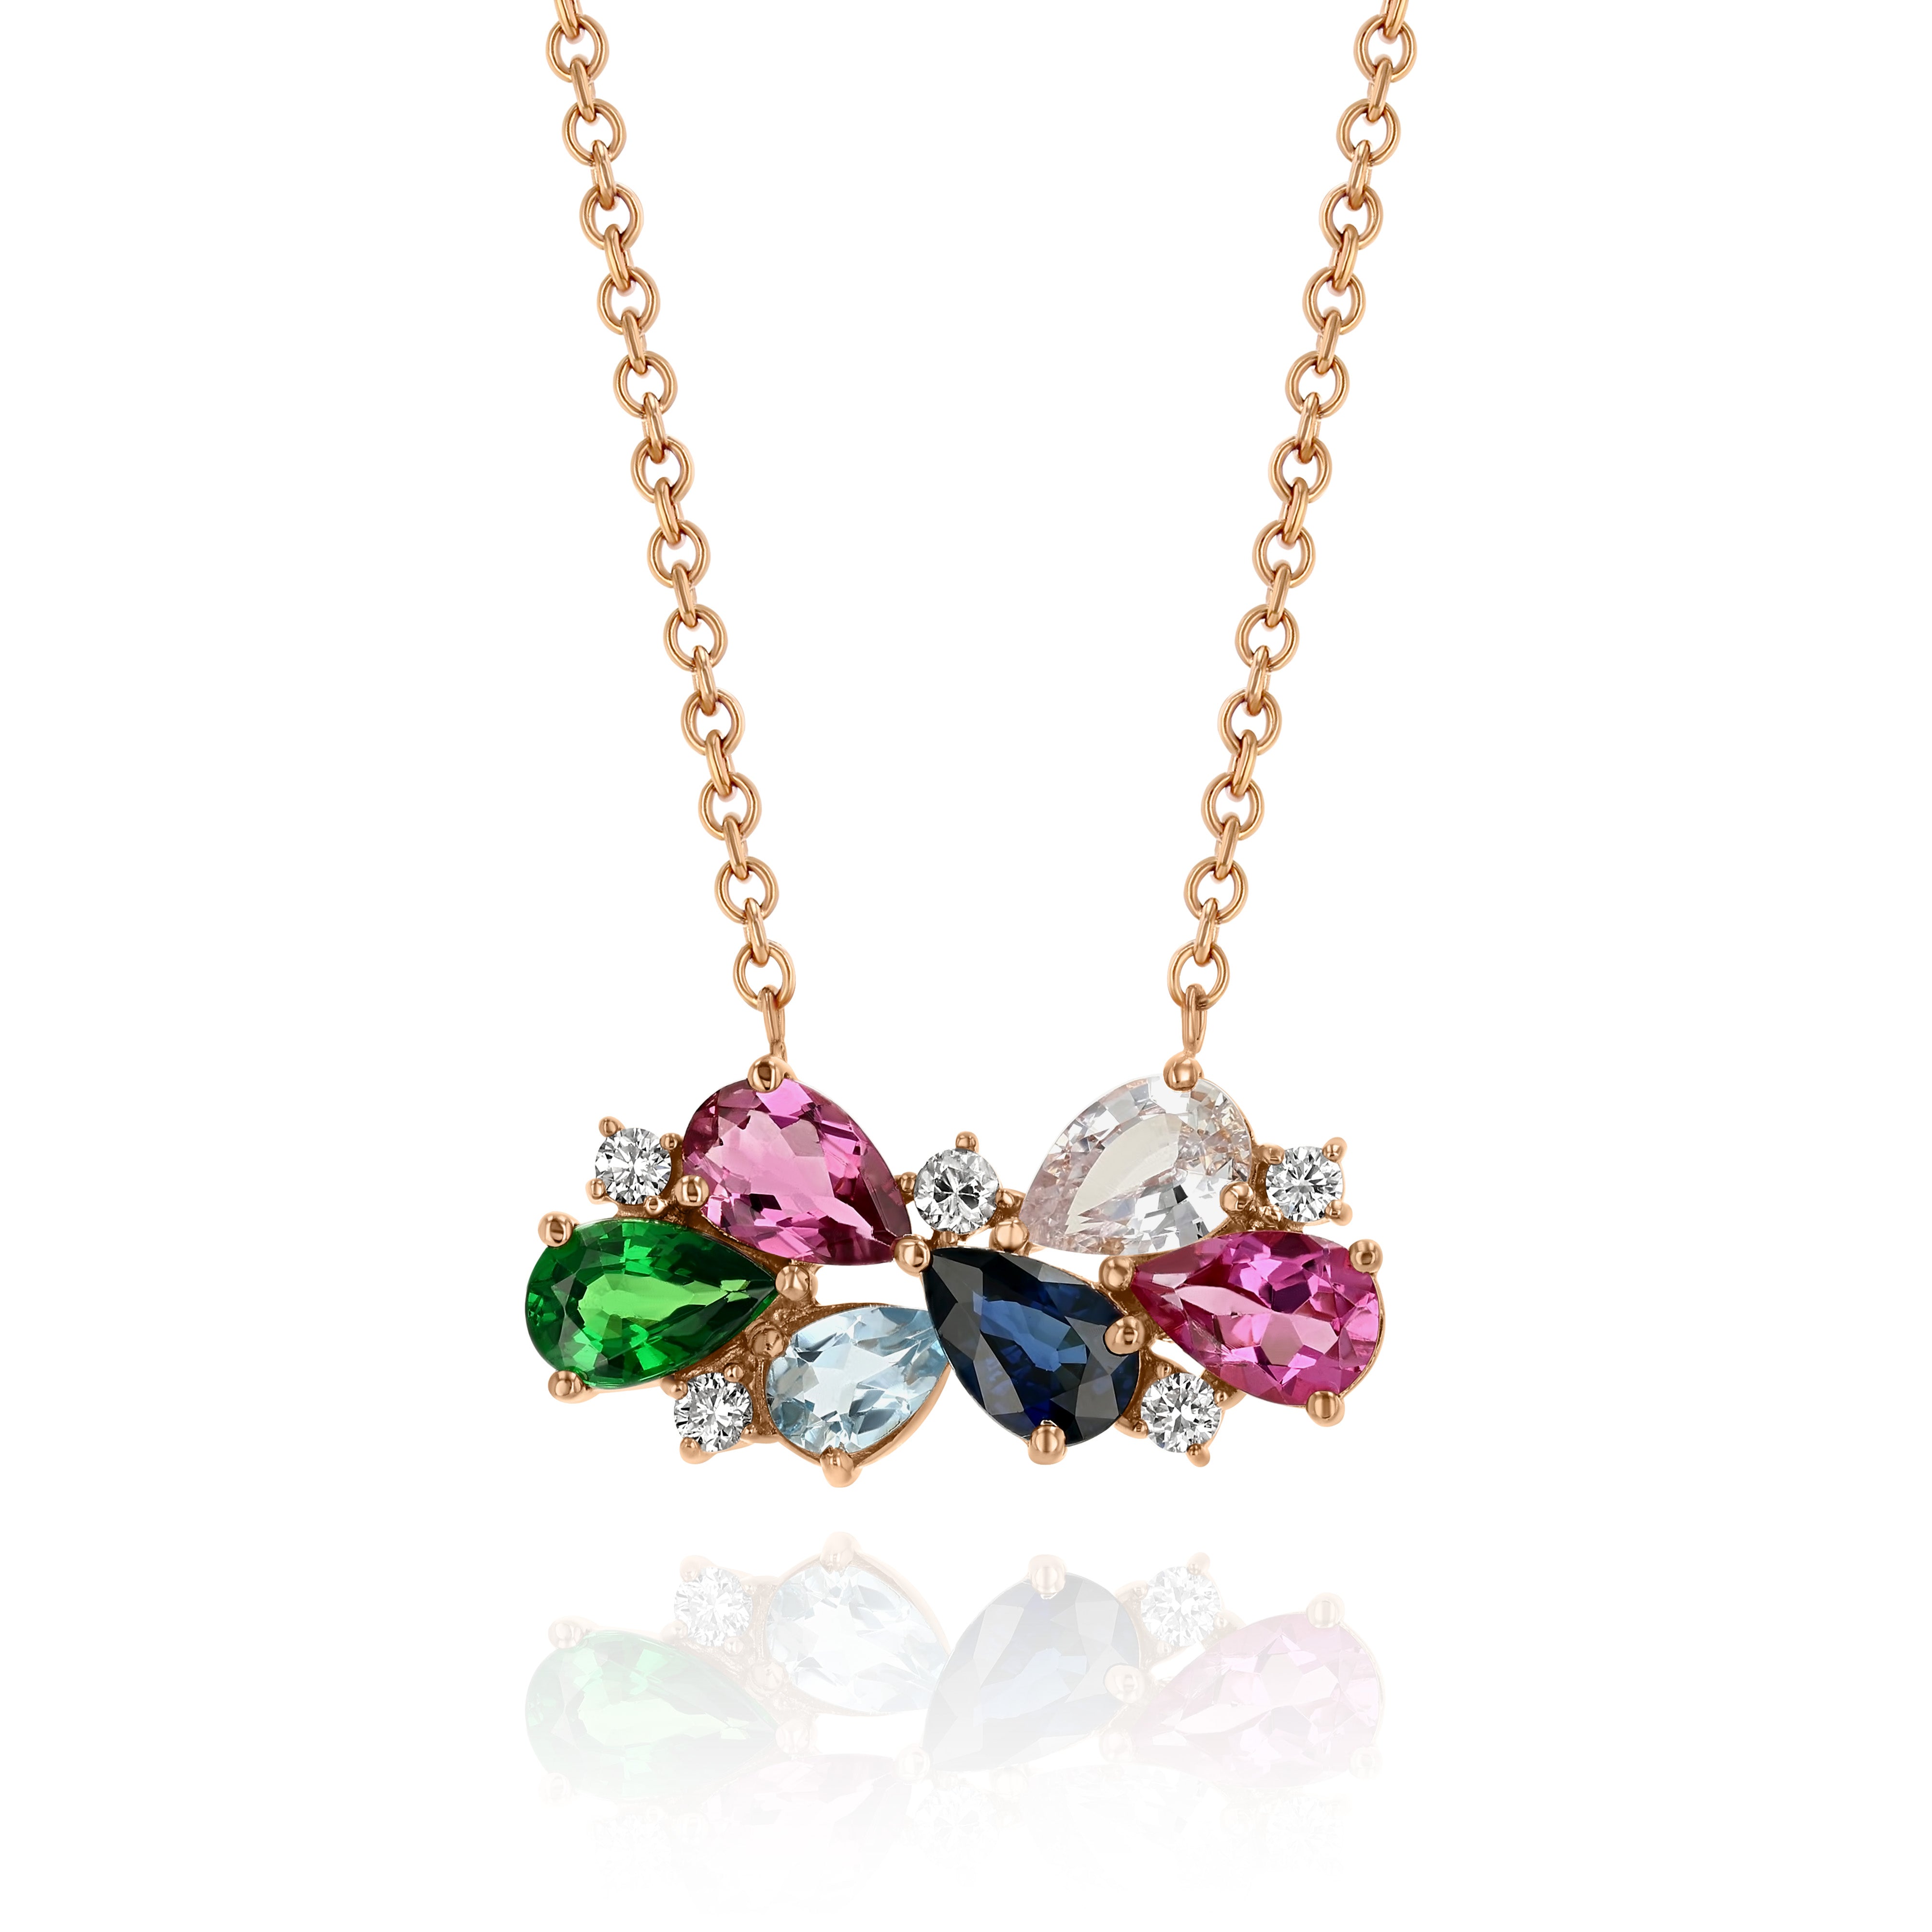 Yellow Gold Necklace with Tsavorite, Aquamarine, White and Pink Sapphires, and Diamonds, Medium